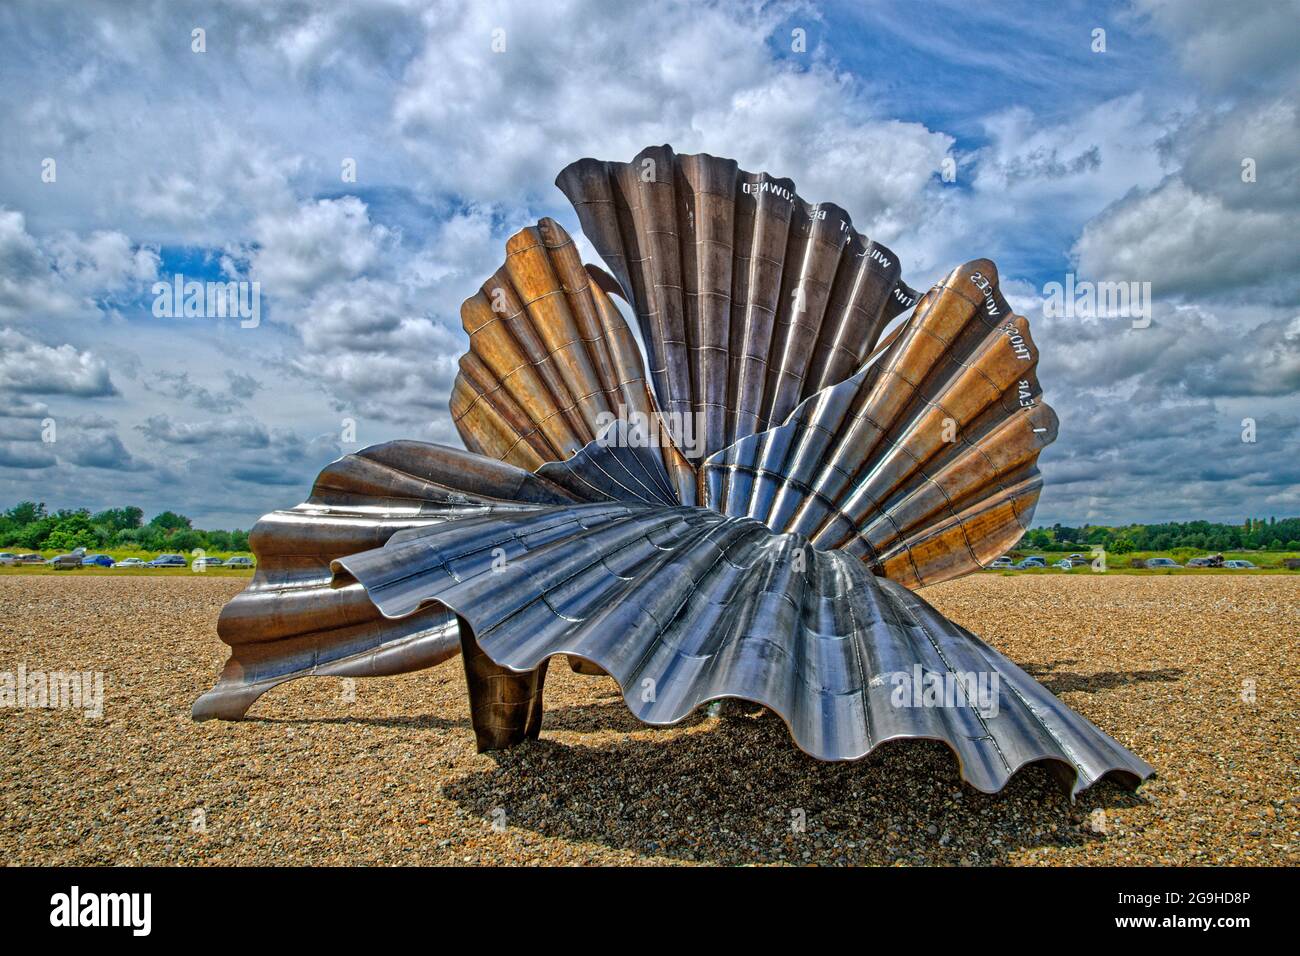 The Benjamin Britten Scallop Shell tribute memorial on the beach at Aldeburgh, Suffolk, England. Stock Photo